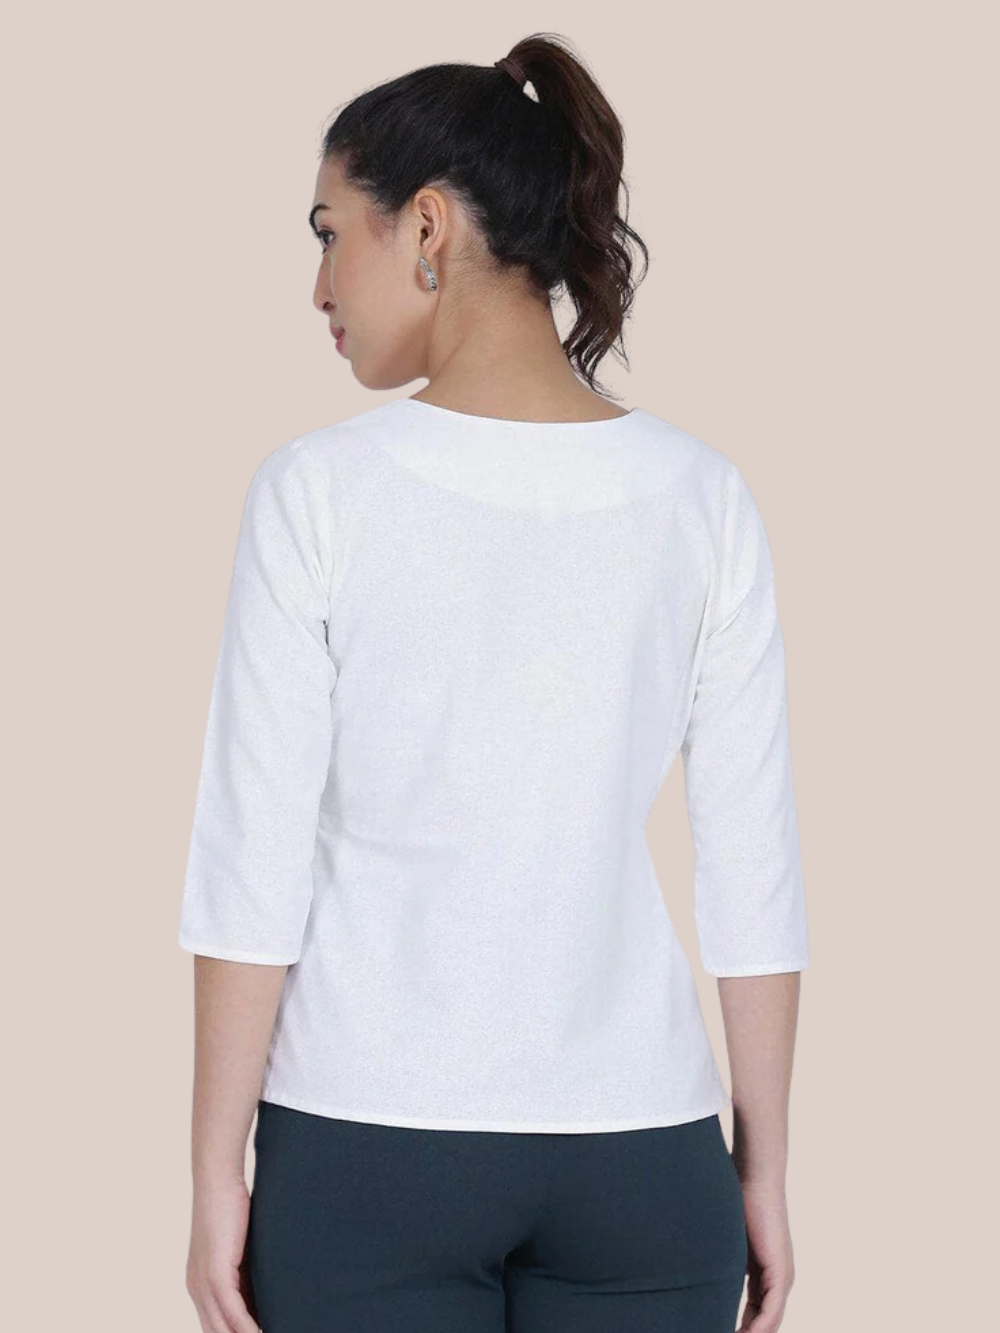 Cotton Flap & Button Top - White